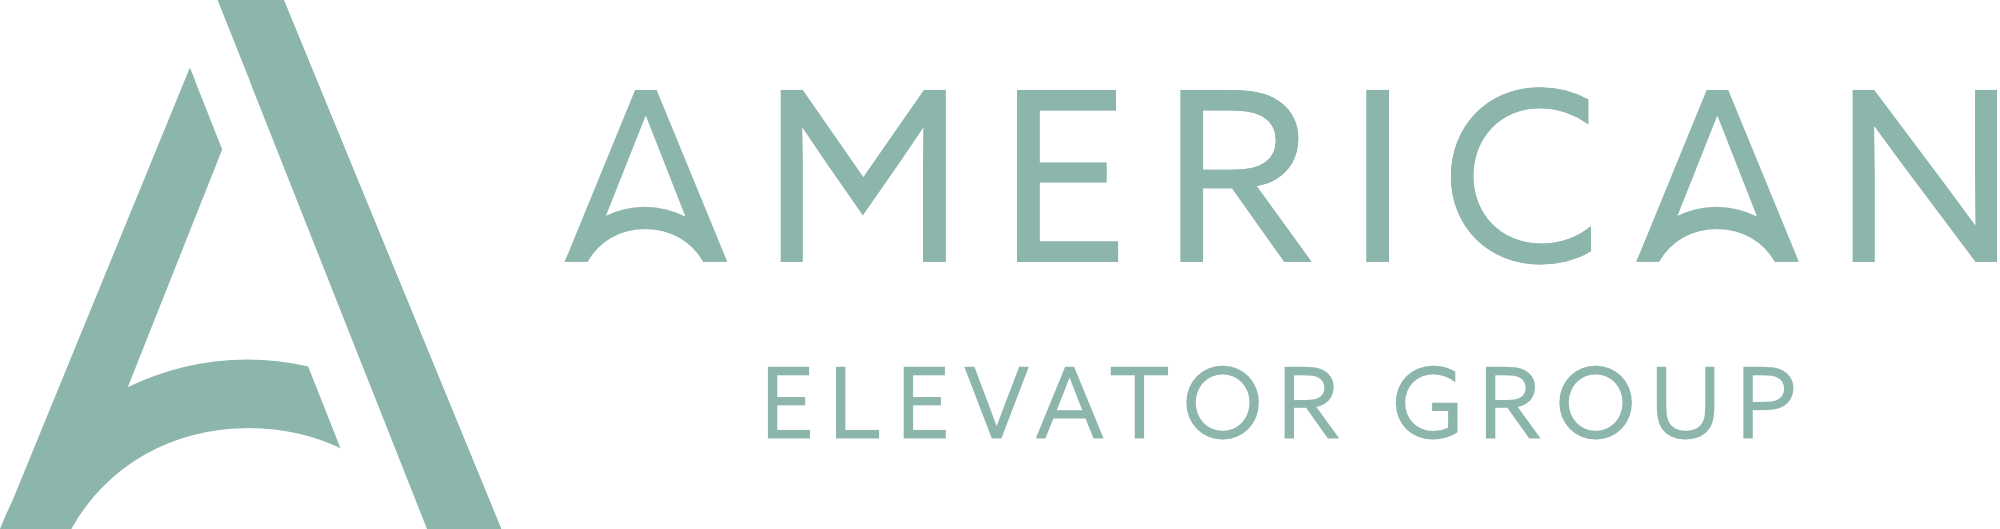 American Elevator Group